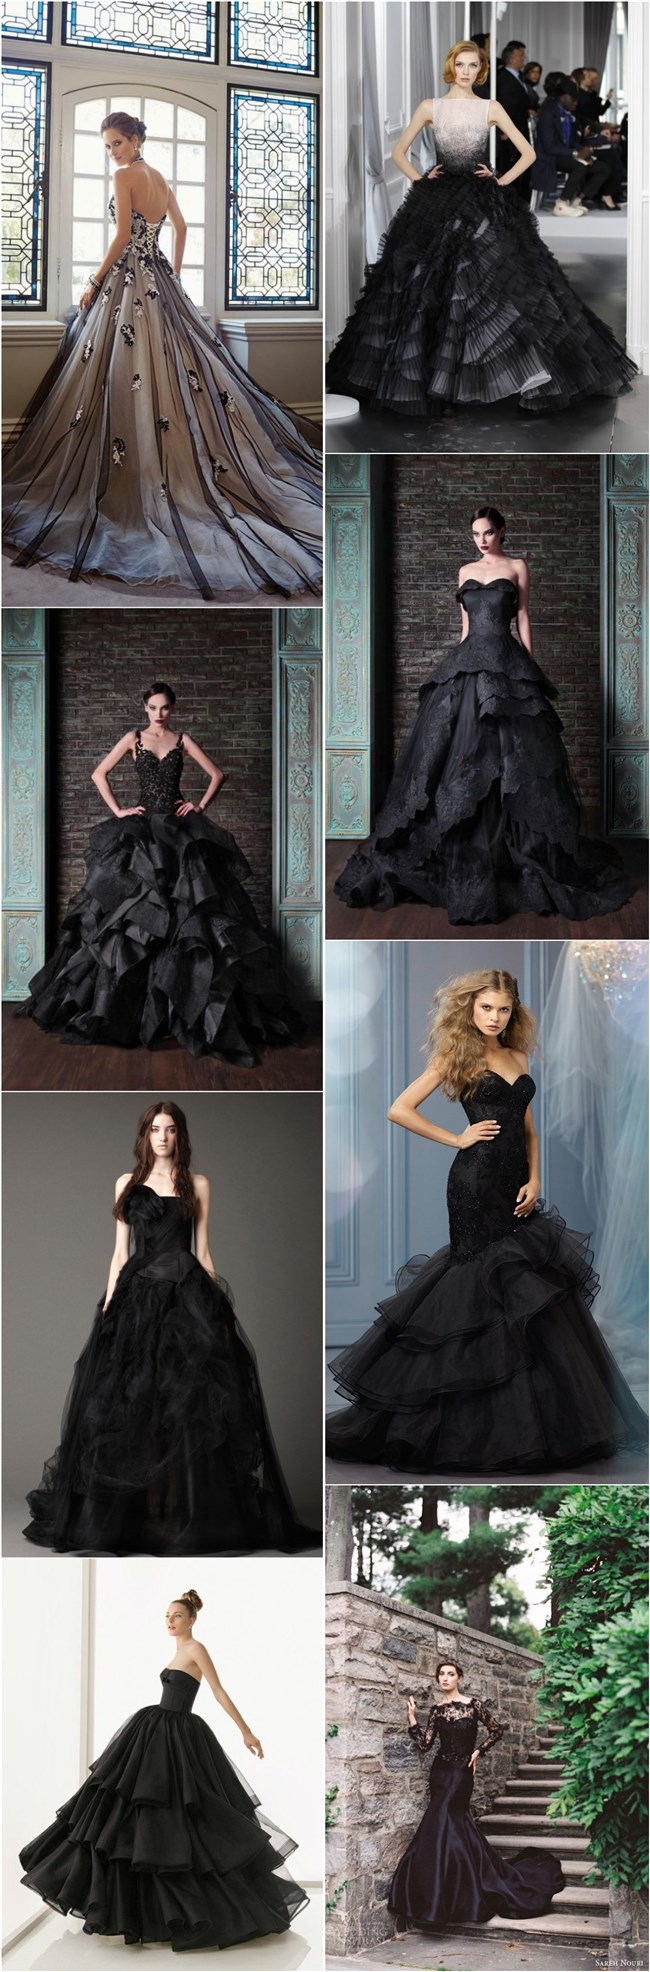 wedding black dress